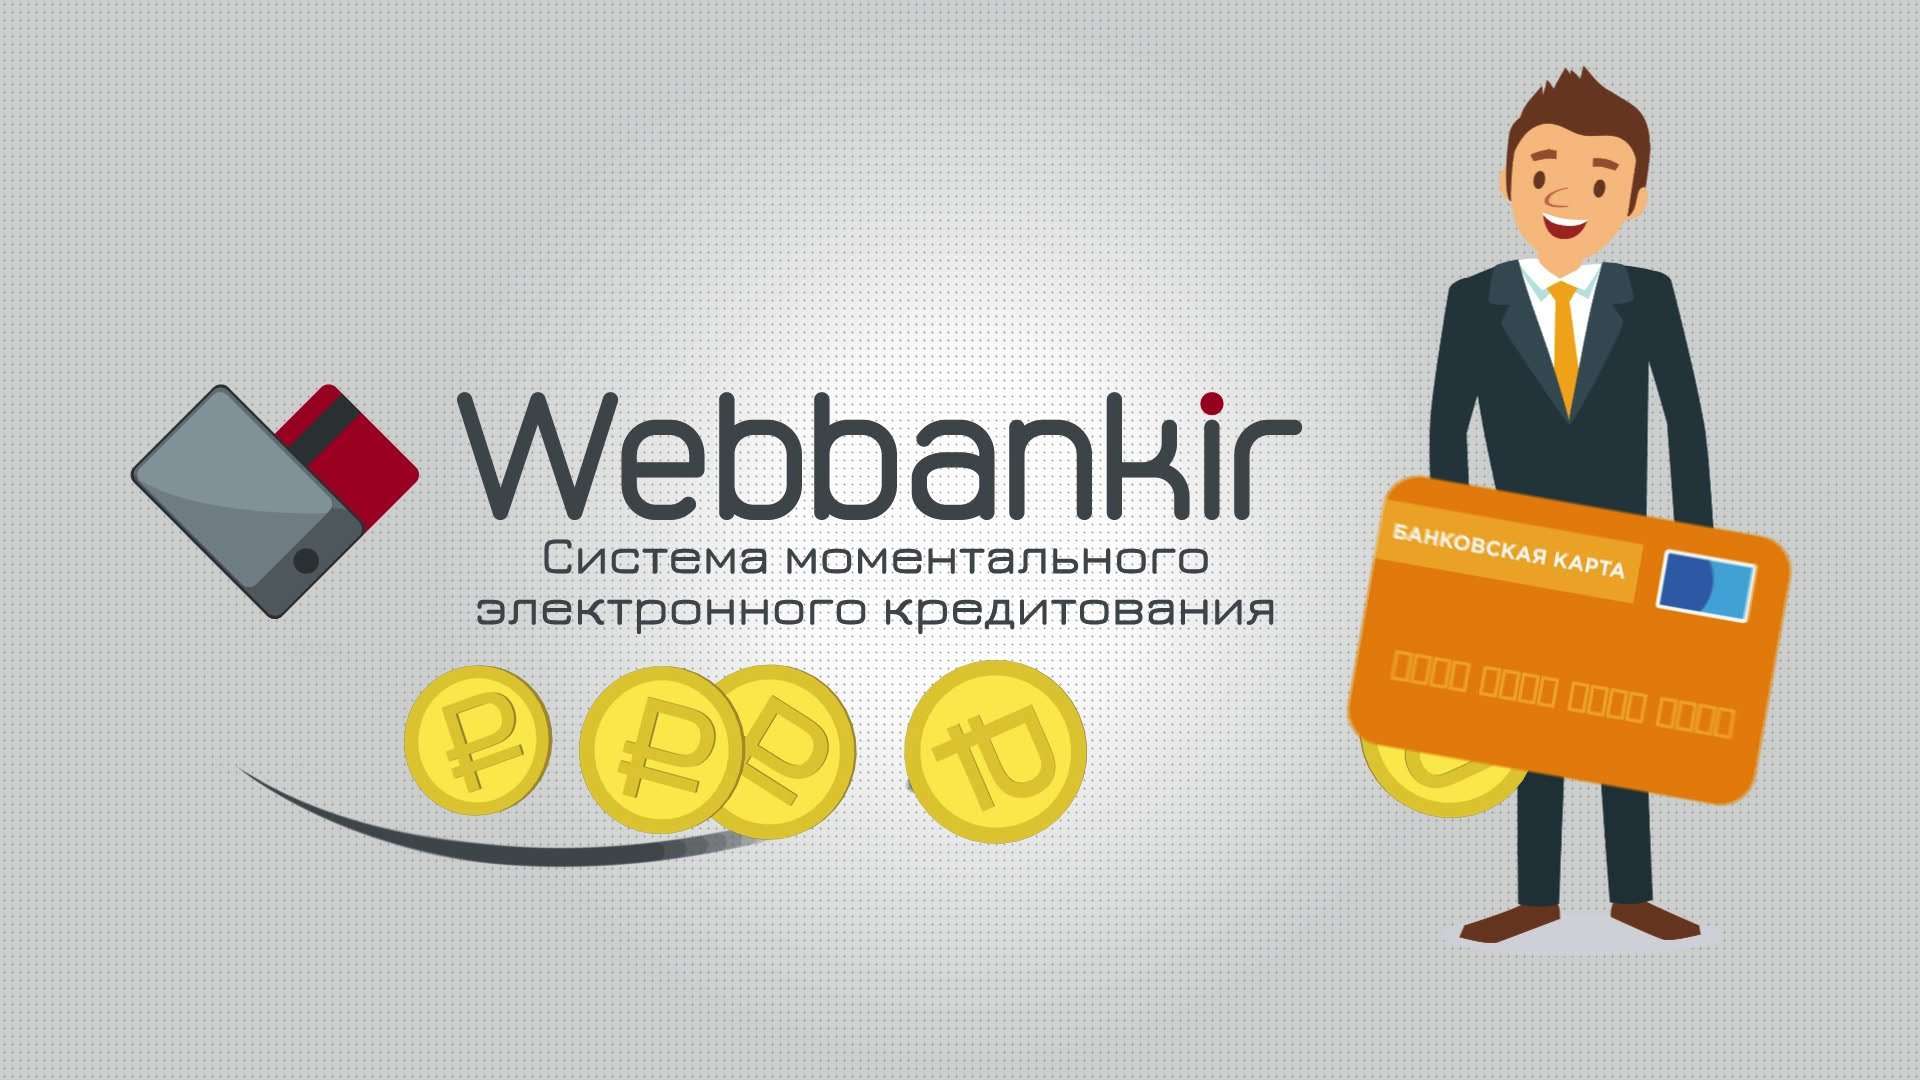 Получить займ на карту microcreditor. Webbankir логотип. Веббанкир картинки. Webbankir займ. Веббанкир займ на карту.